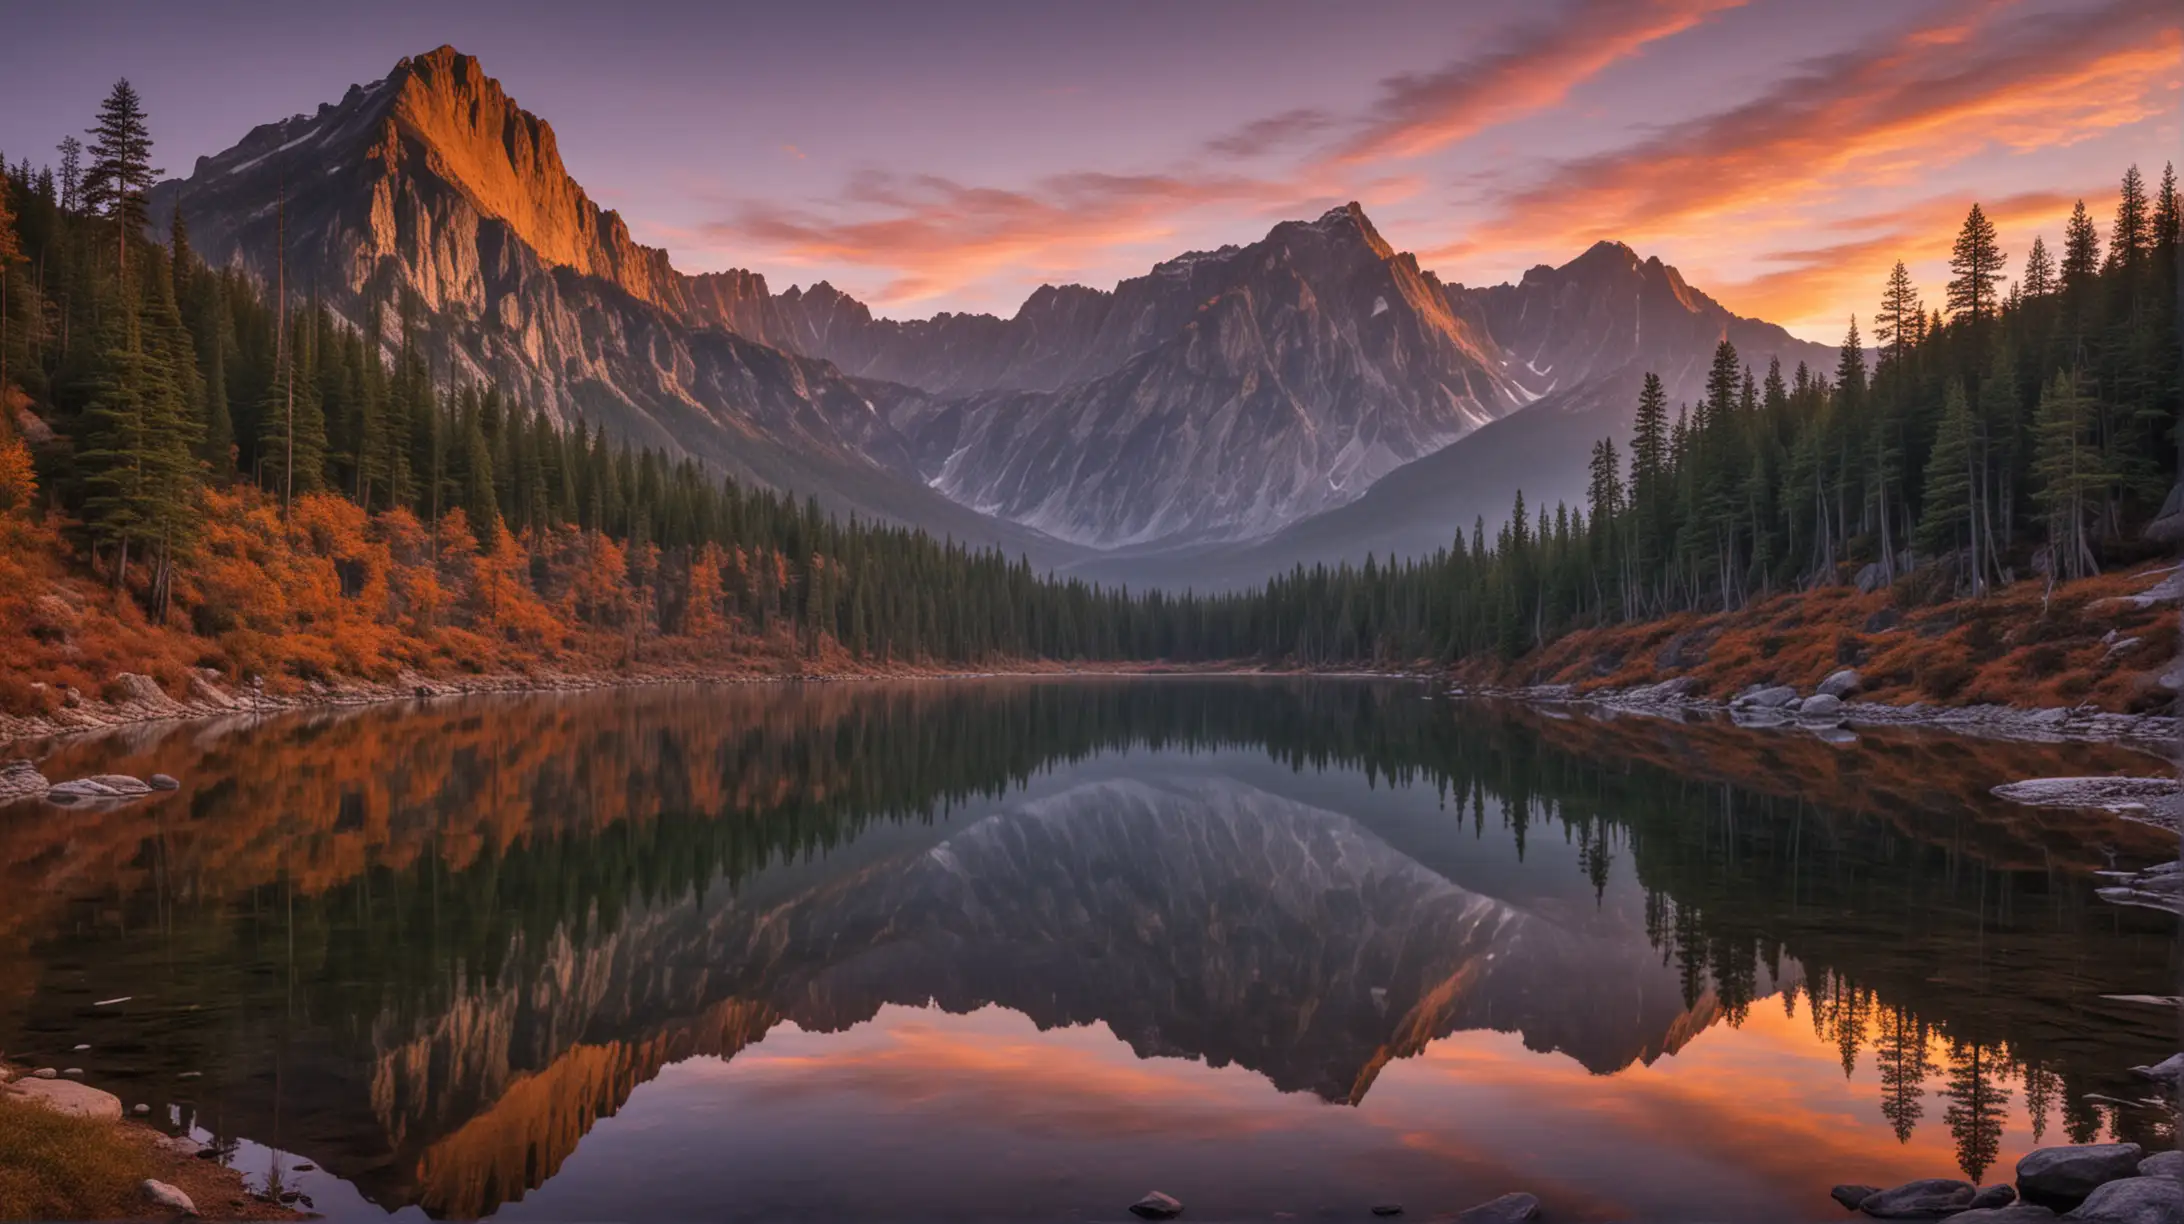 Panoramic Sunrise Mountain Landscape with Serene Lake and Photographer